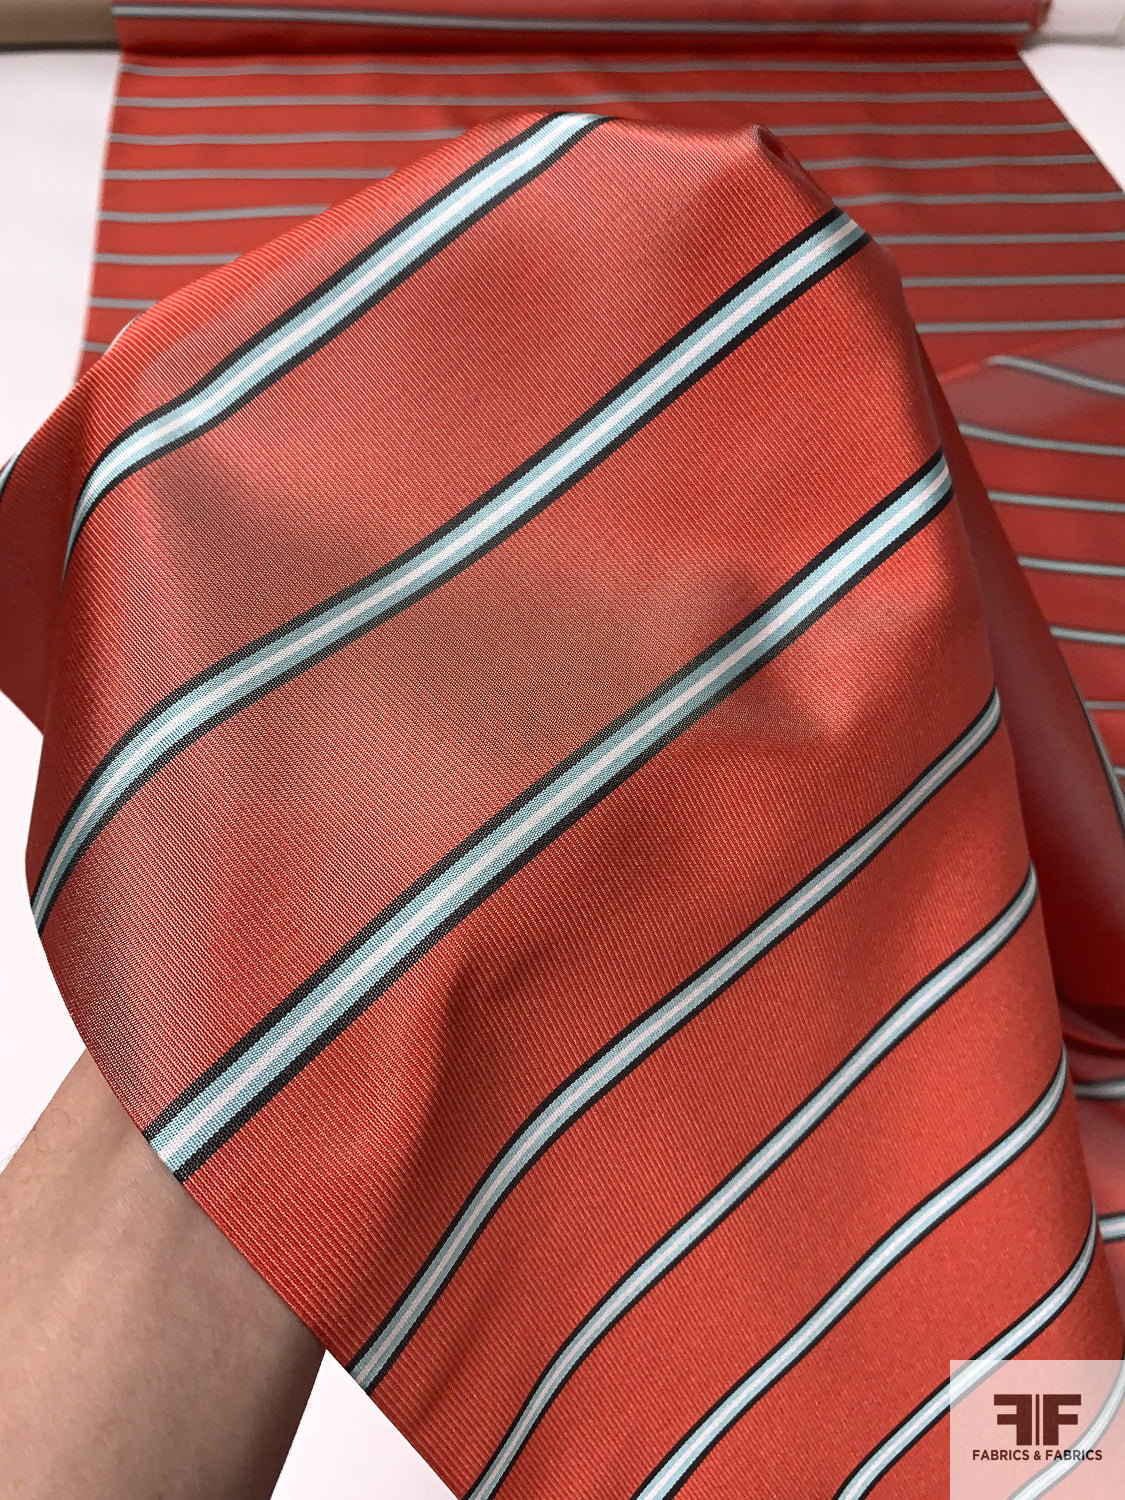 Horizontal Striped Necktie Silk - Hot Coral-Orange / Seafoam / Black / White